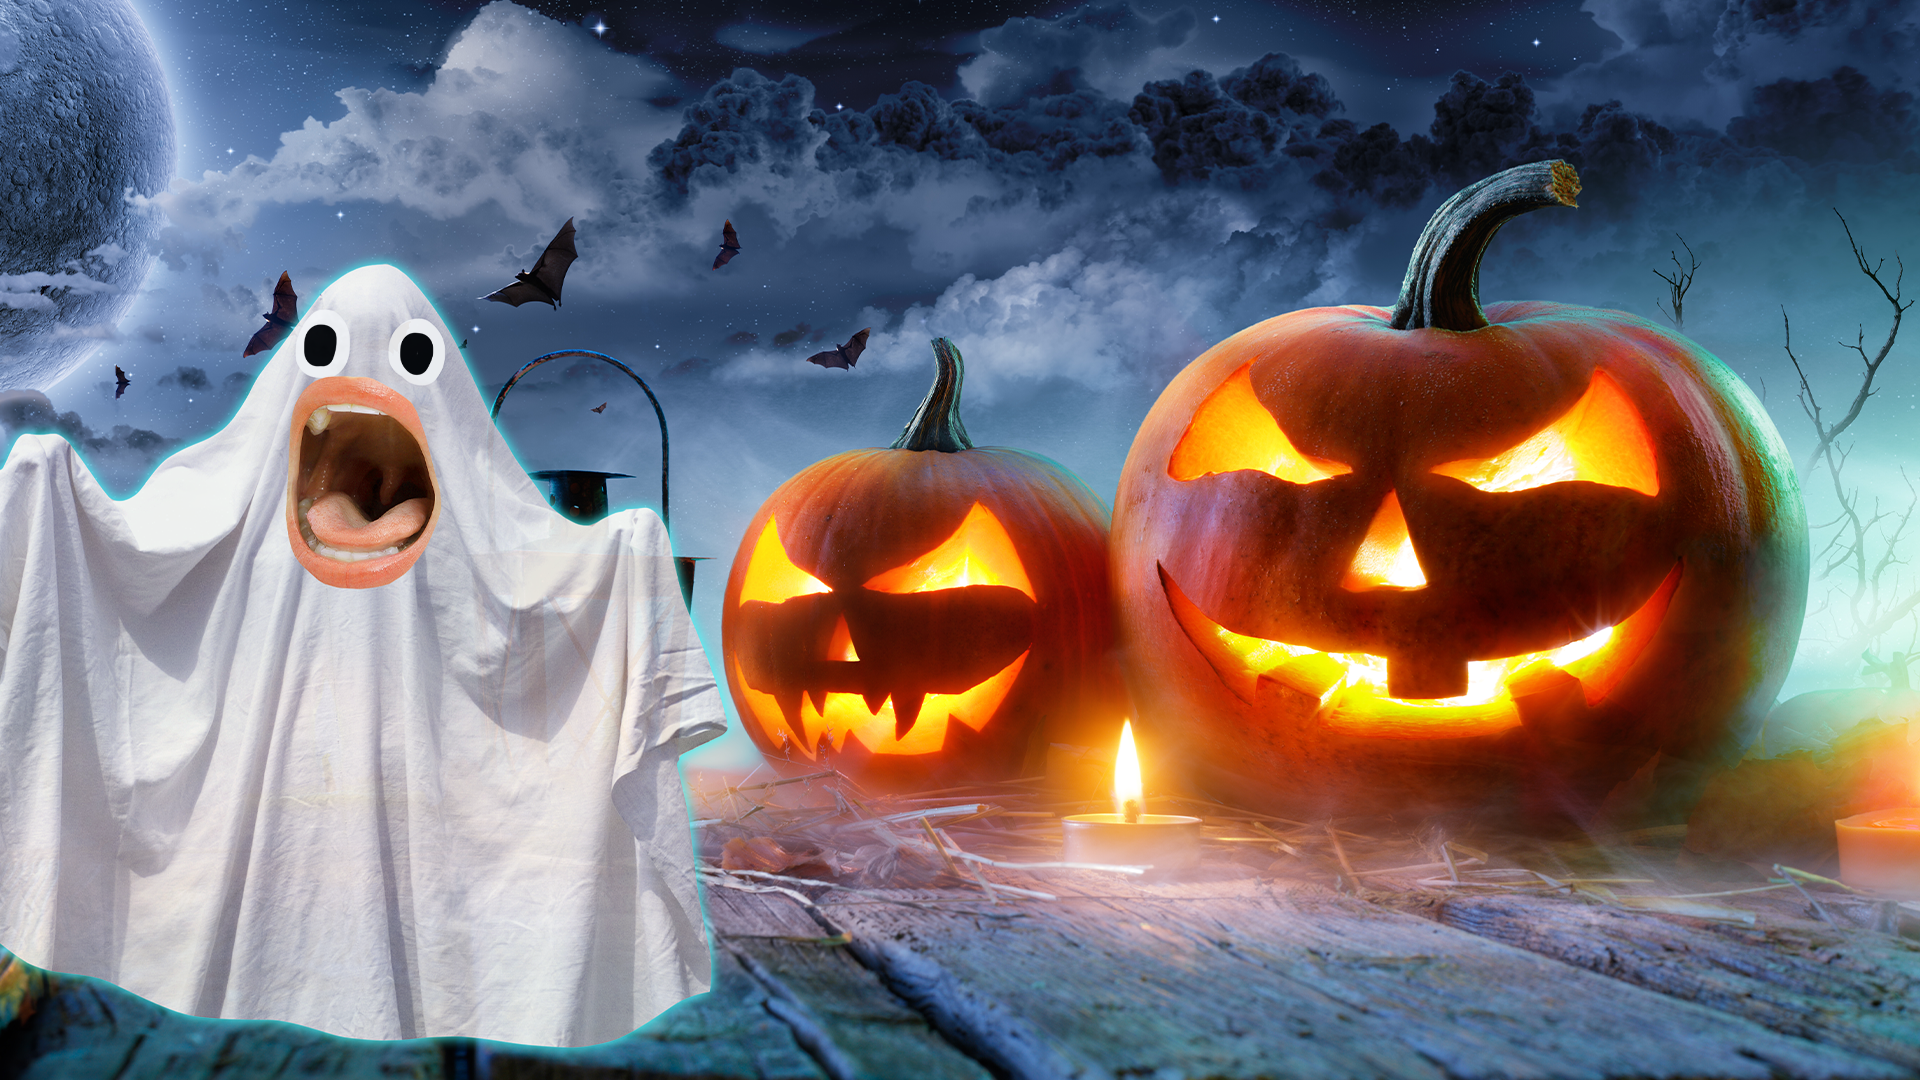 A spooky Halloween scene with Beano ghost